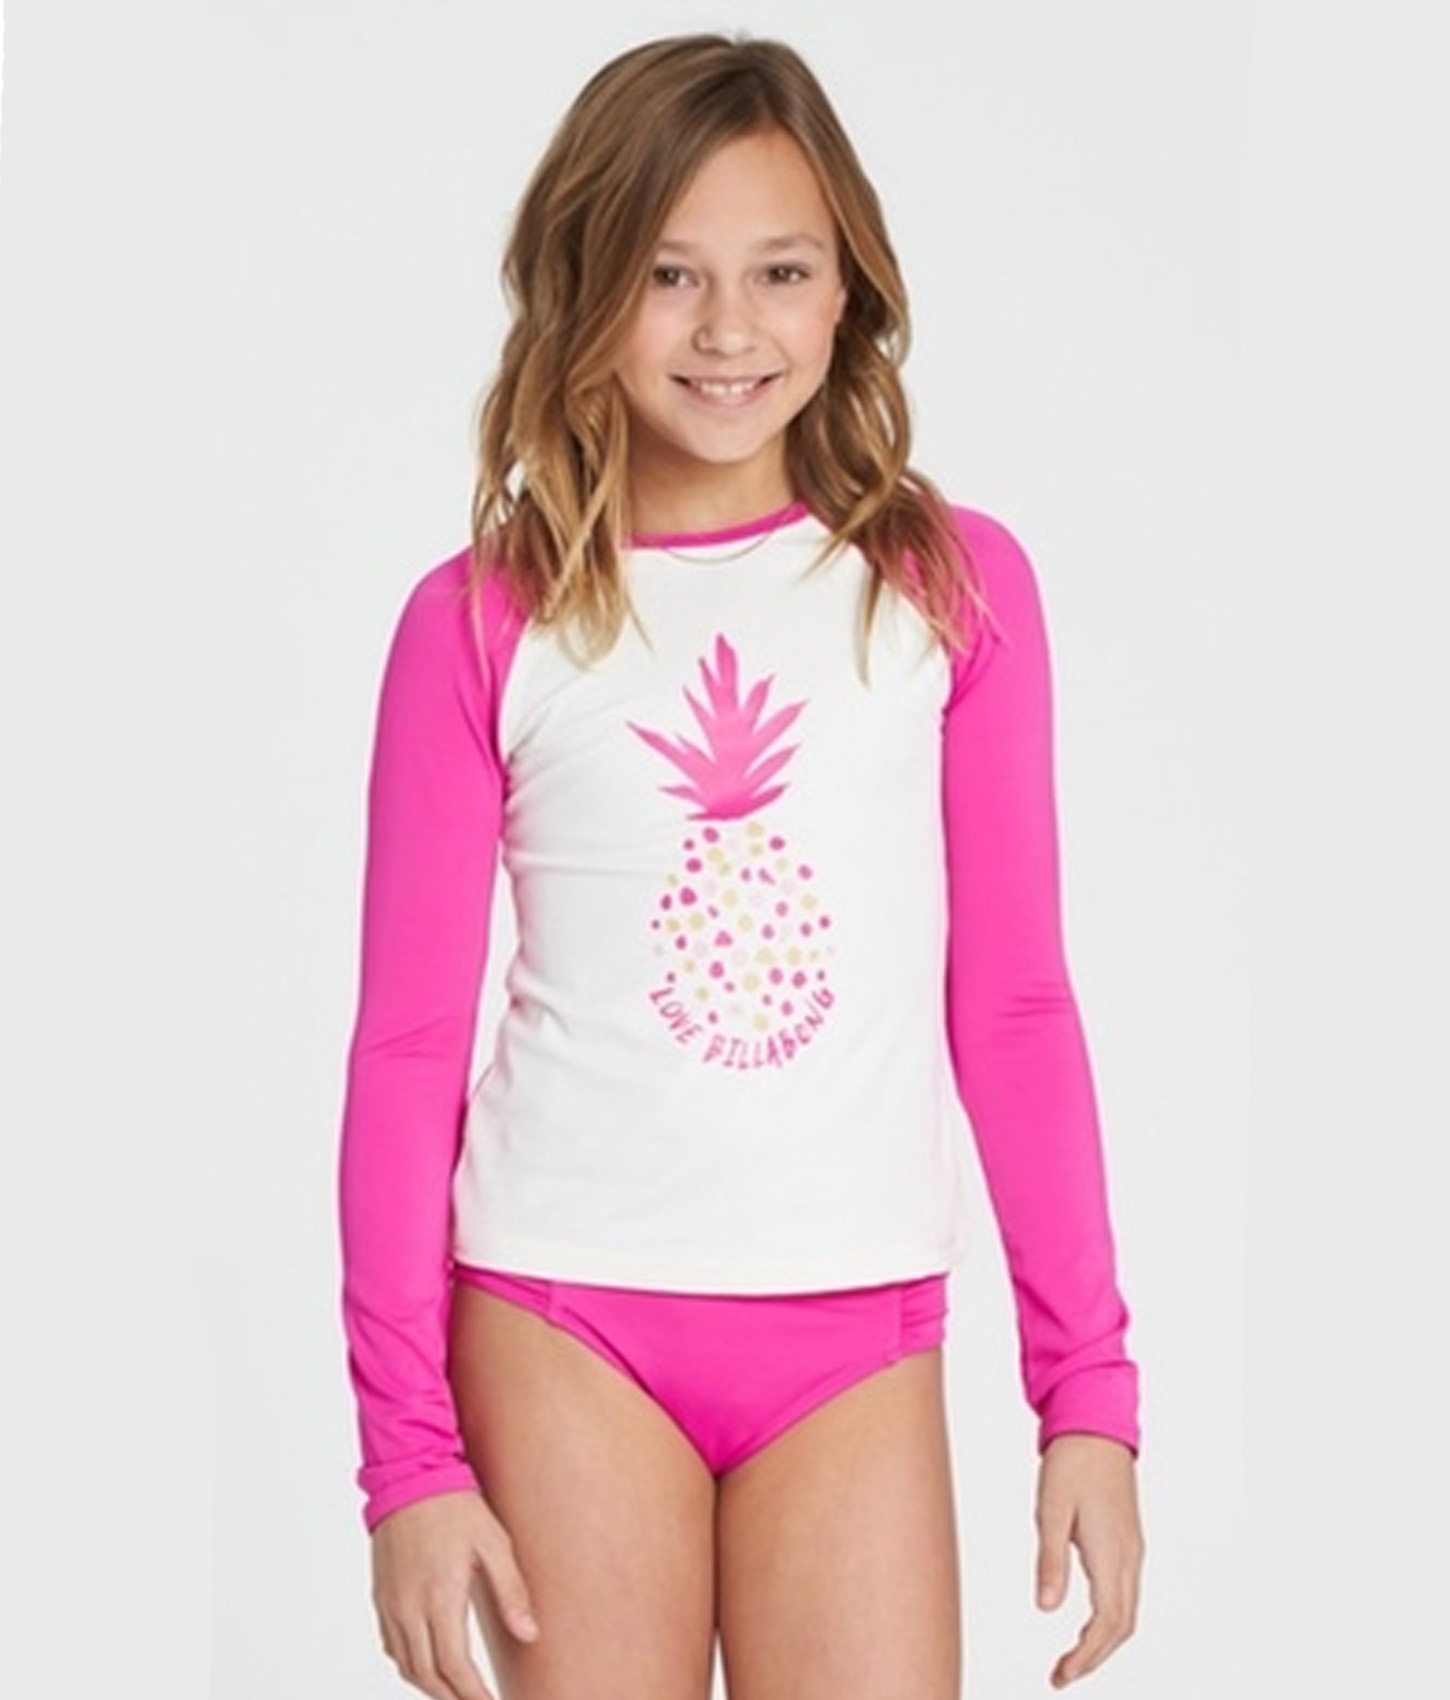 Roxy - Girl's 4-16 Hibiscus Reversible Two Piece Bikini Set for Girls - 14 Pink